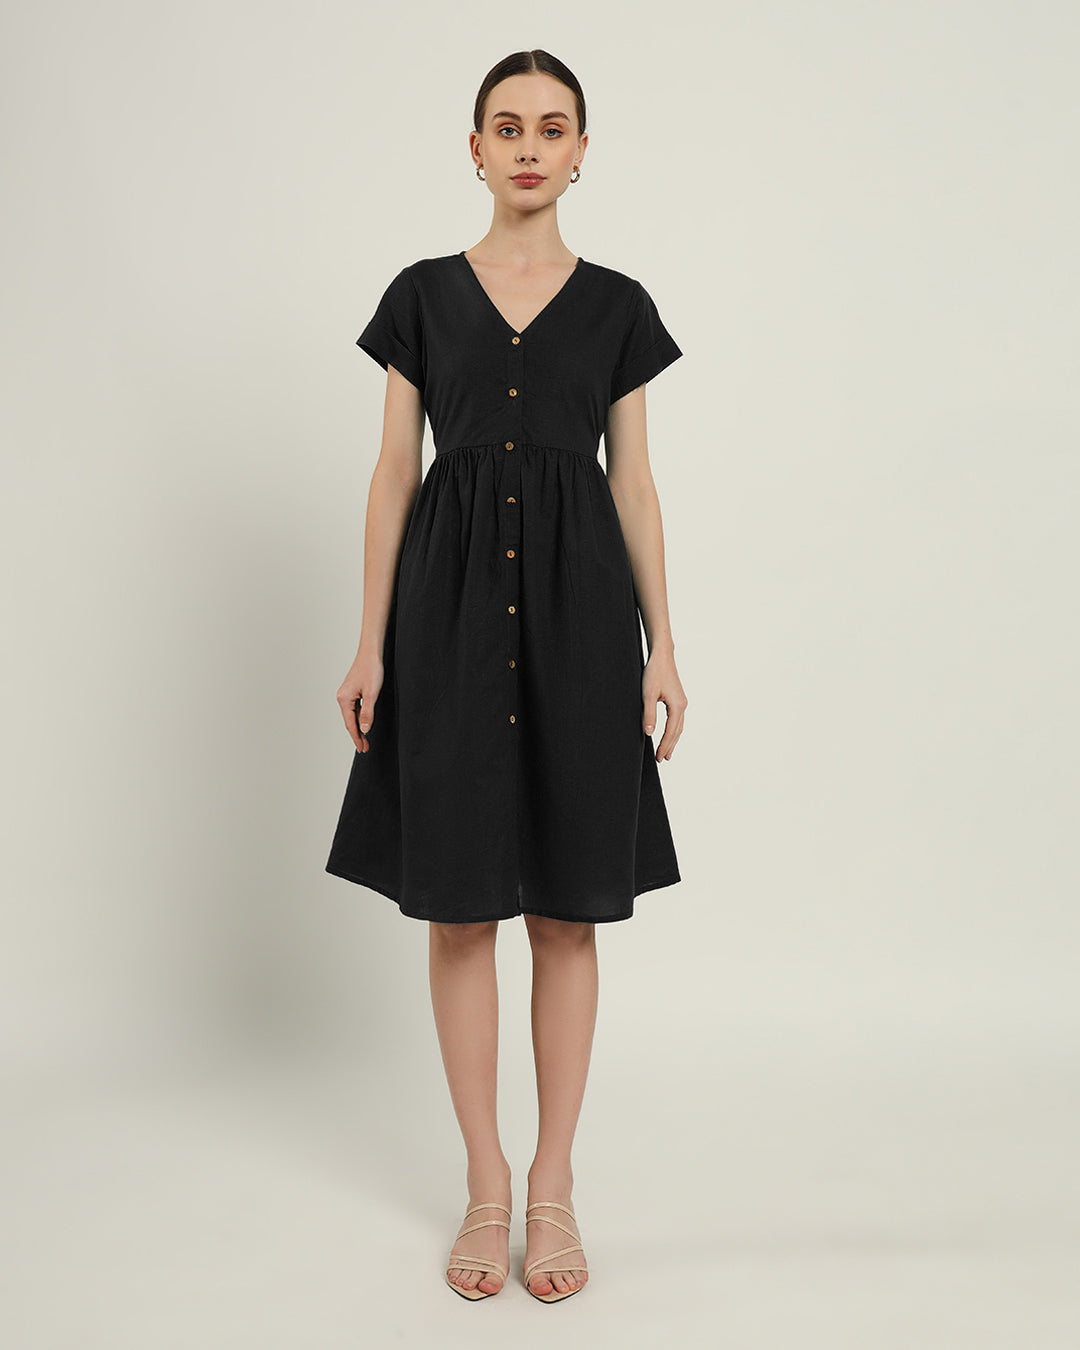 The Valence Noir Cotton Dress